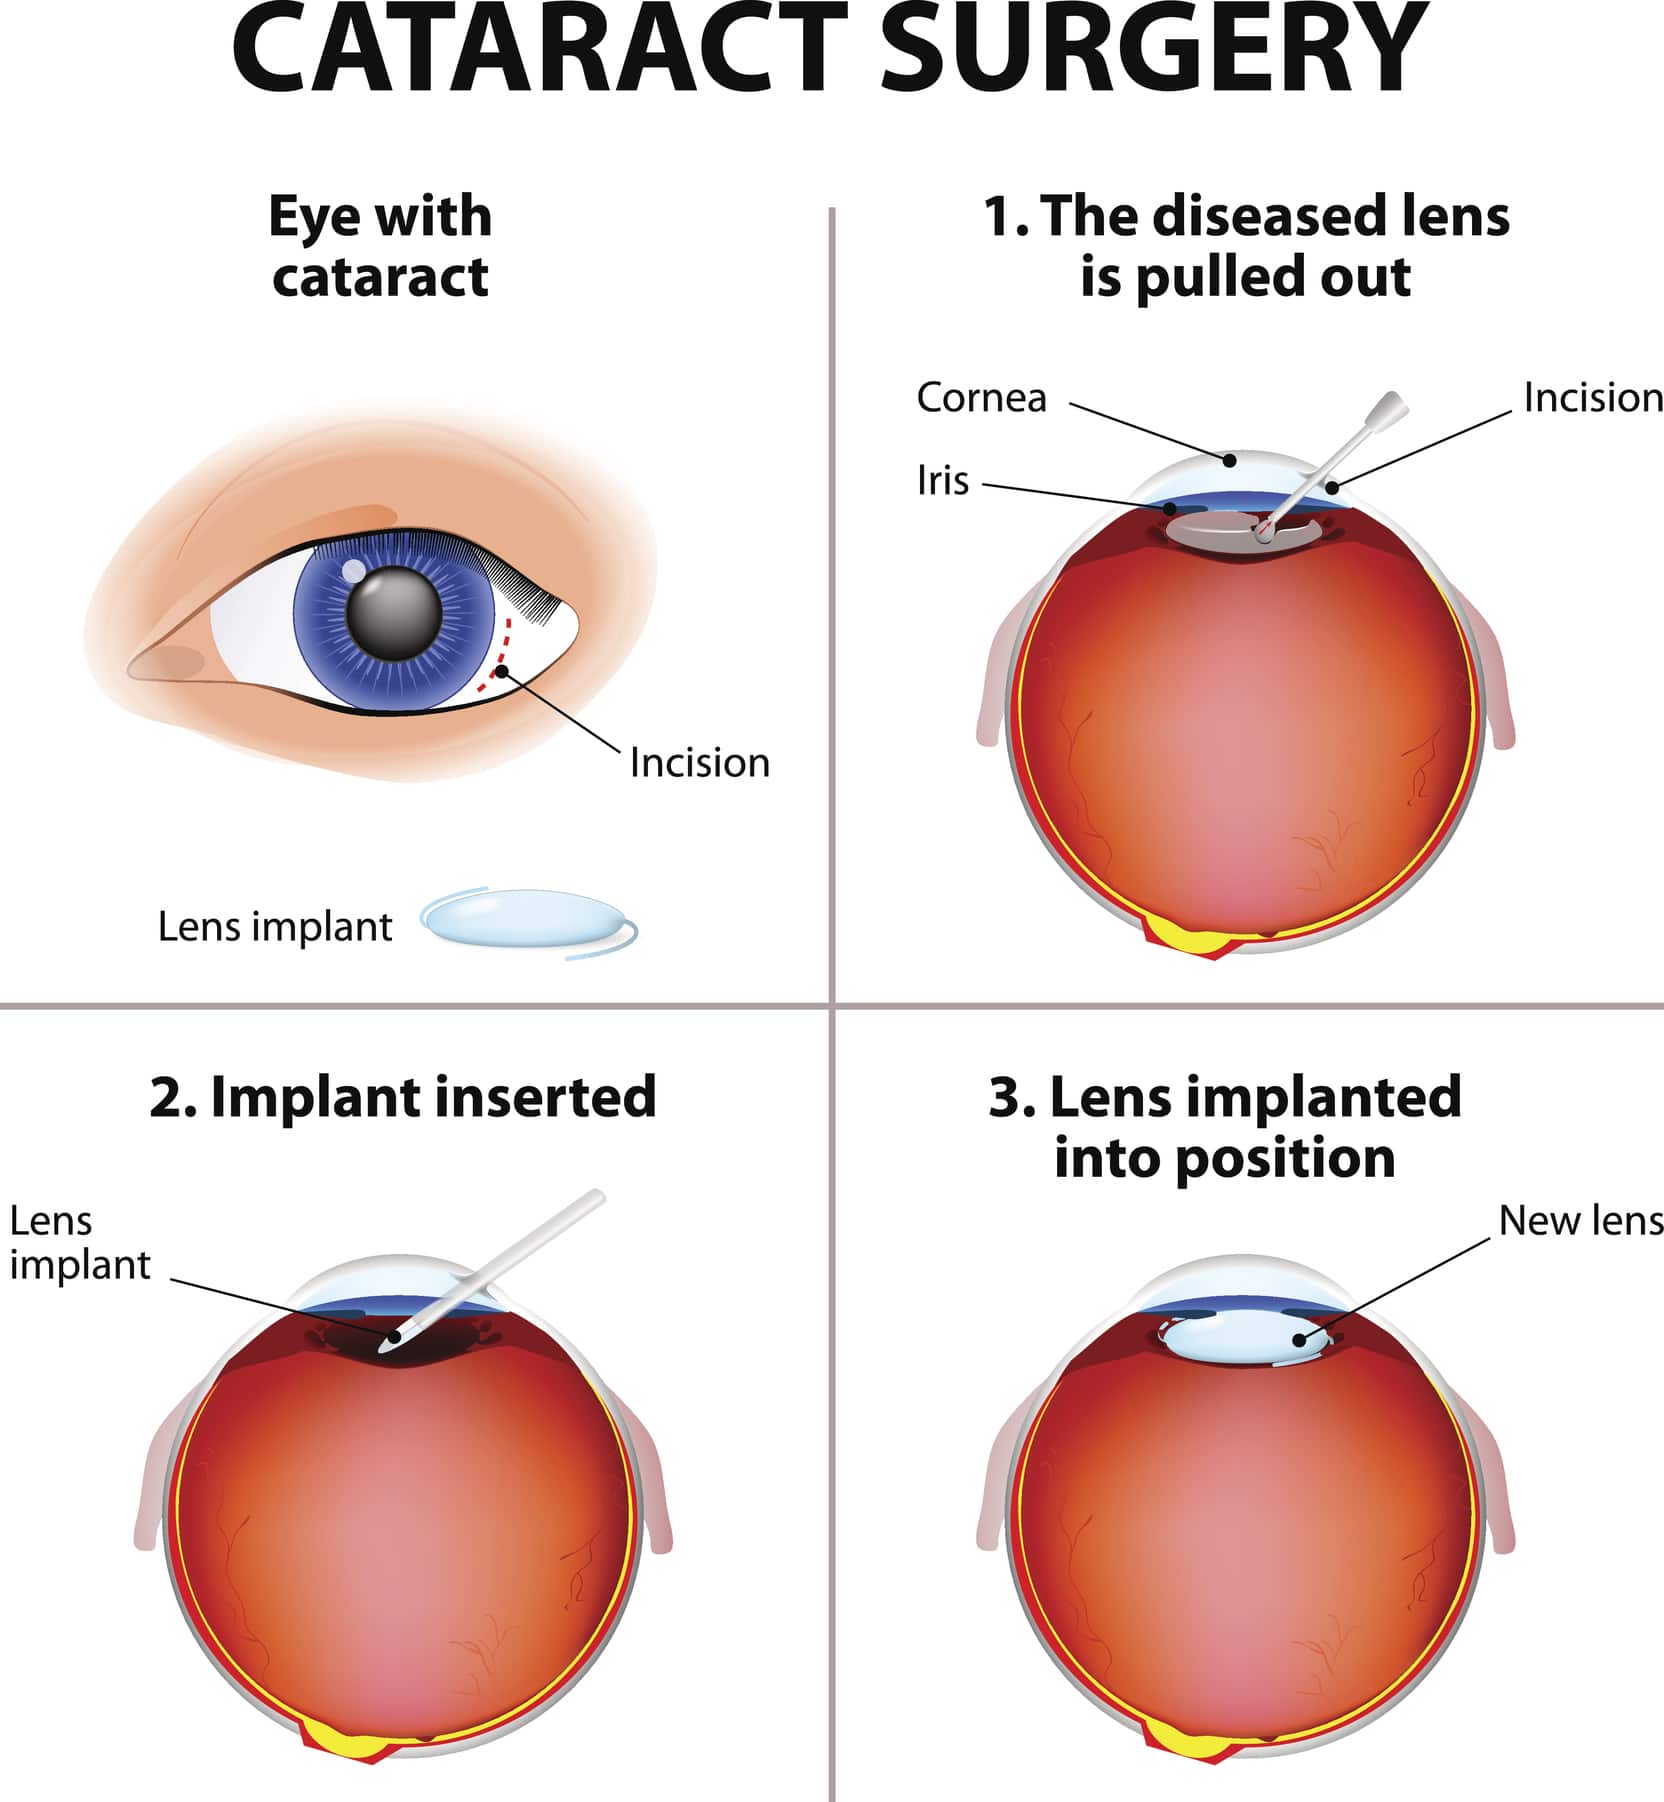 The Cataract Surgery process